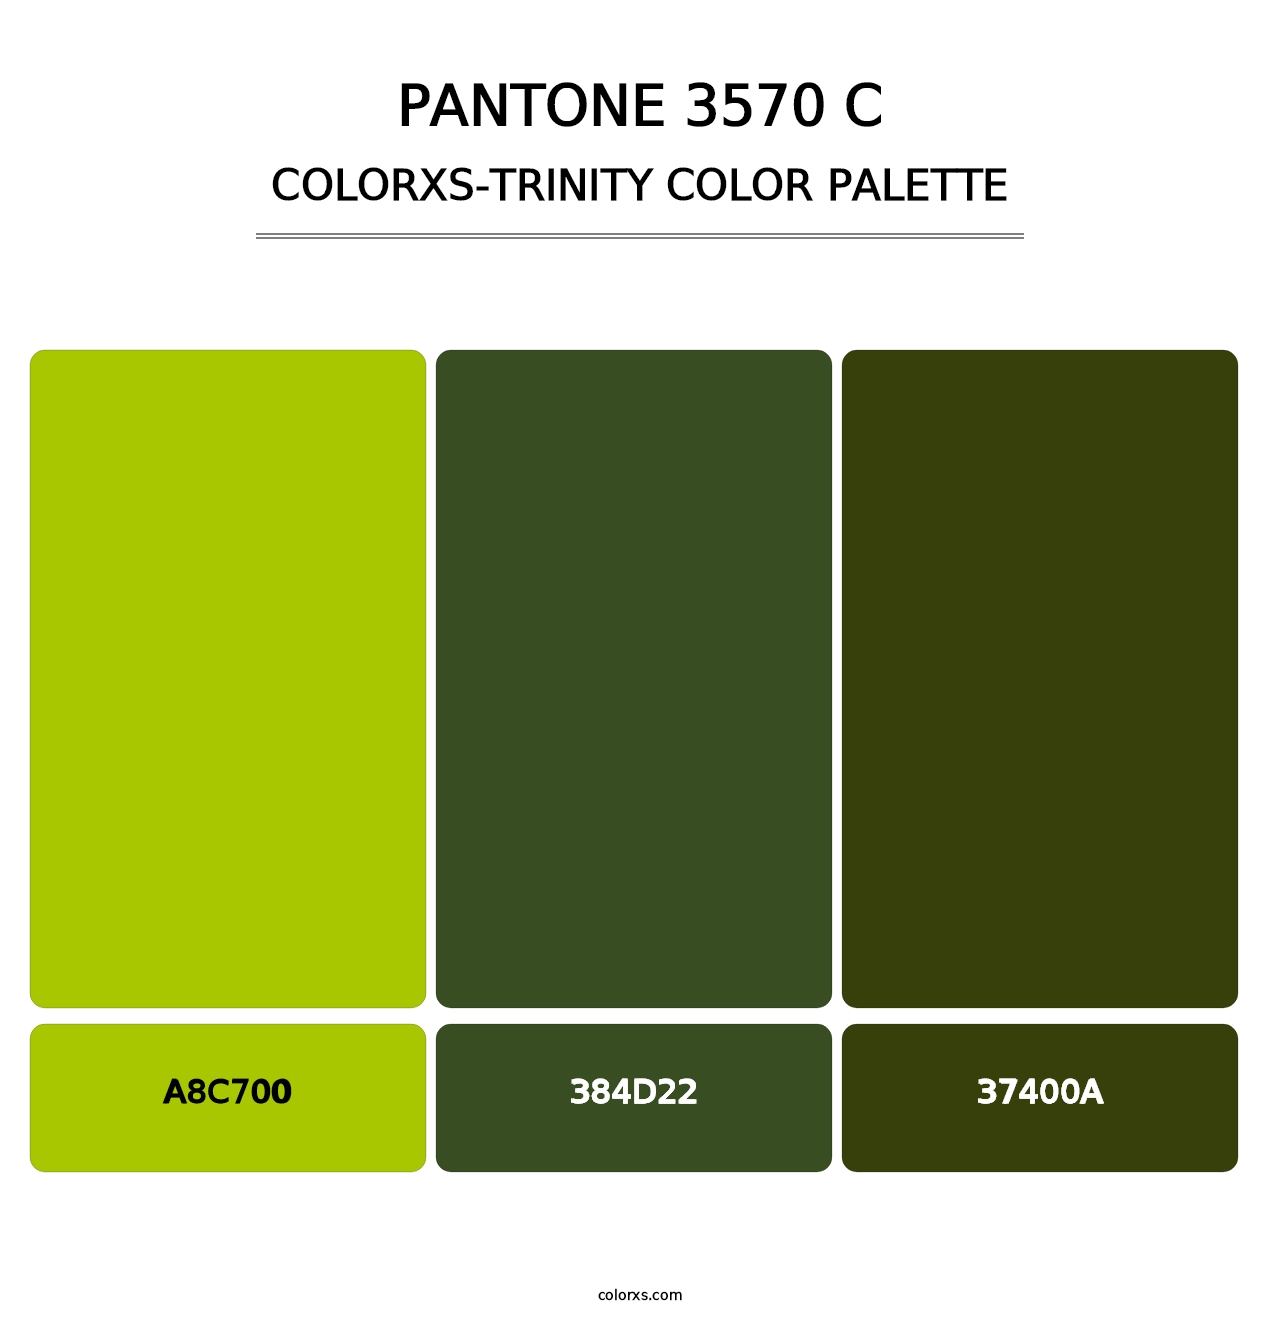 PANTONE 3570 C - Colorxs Trinity Palette